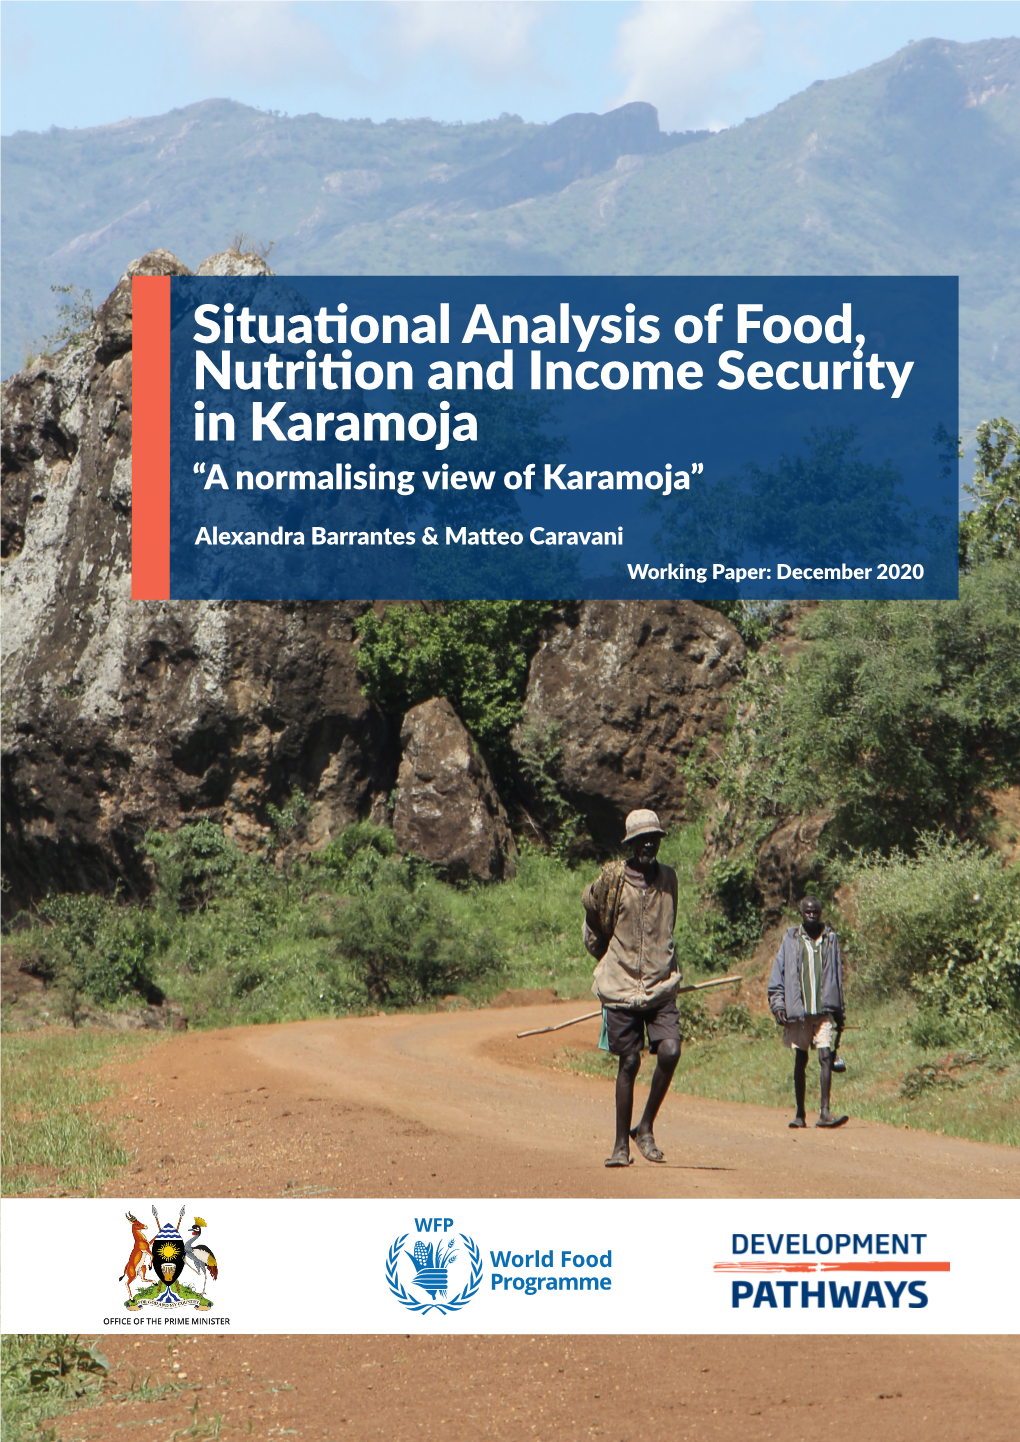 Situational Analysis of Food, Nutrition and Income Security in Karamoja “A Normalising View of Karamoja”